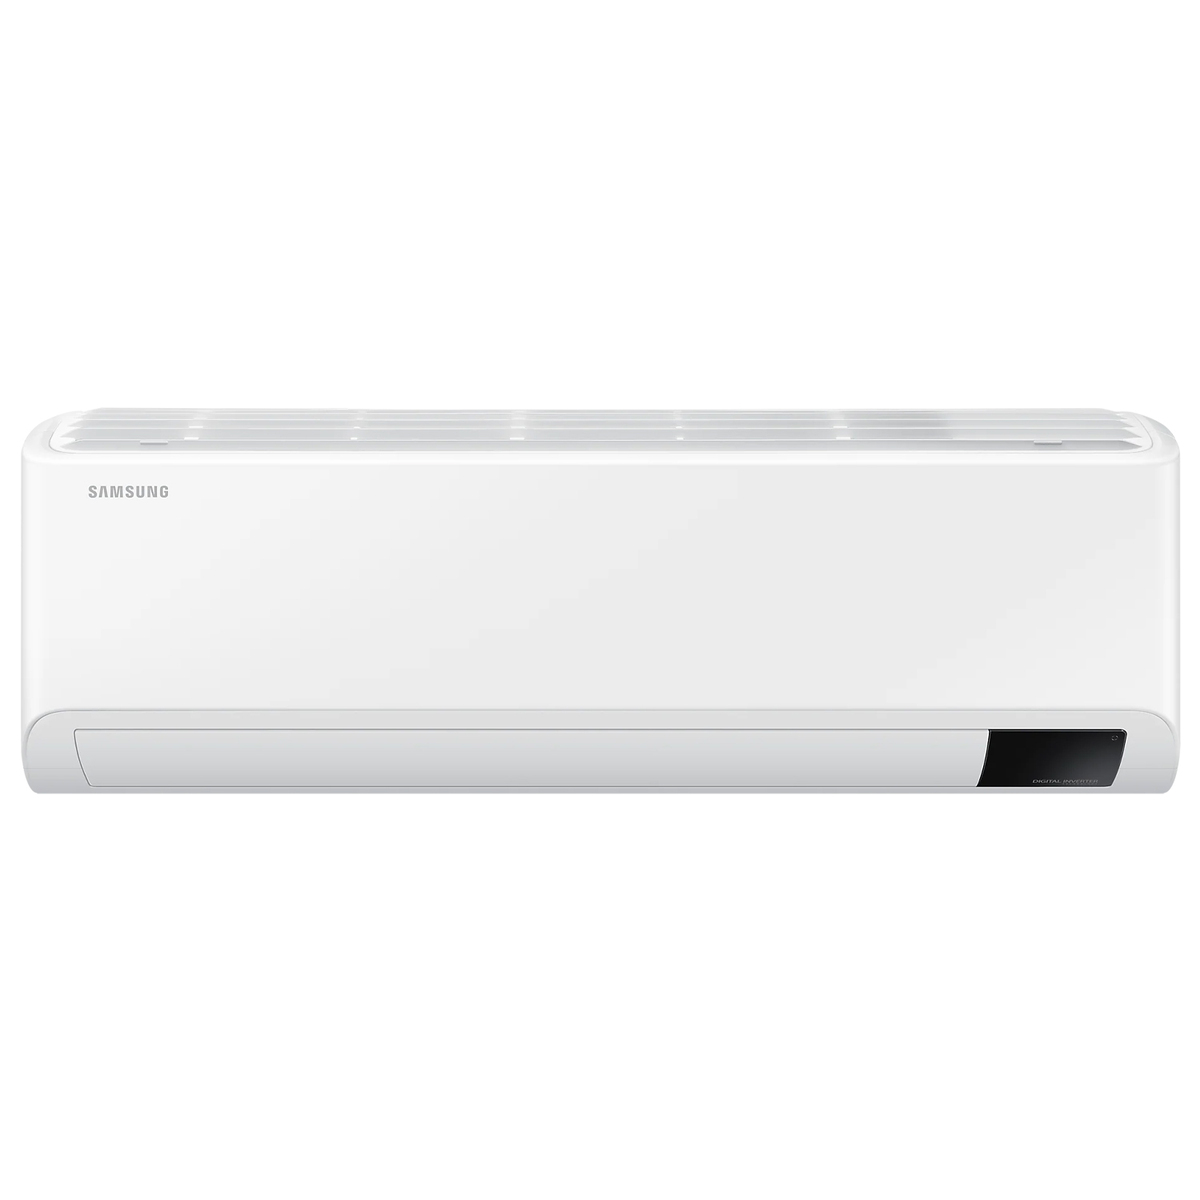 Samsung Inverter Air Conditioner AR18BY4YAWK 1.5 Ton 4*